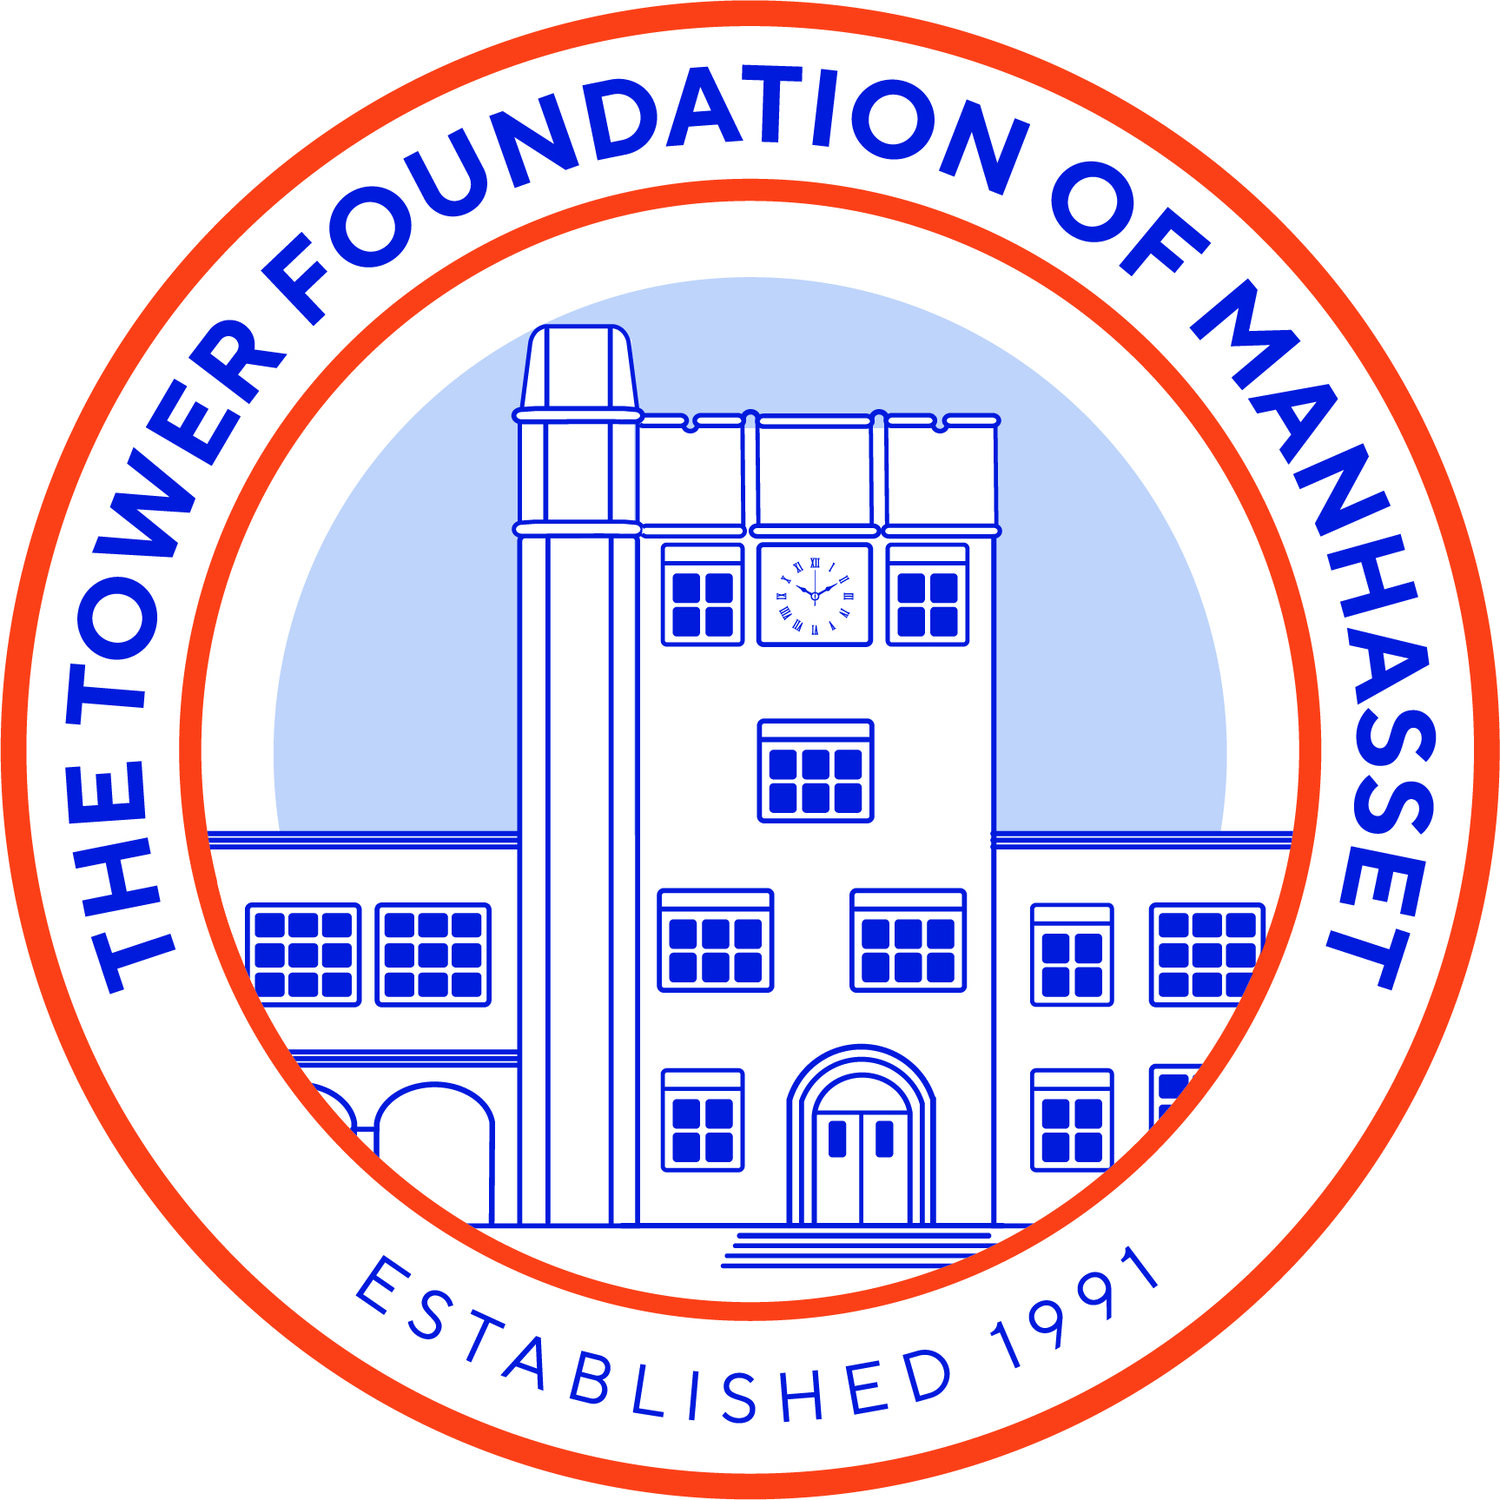 The Tower Foundation of Manhasset